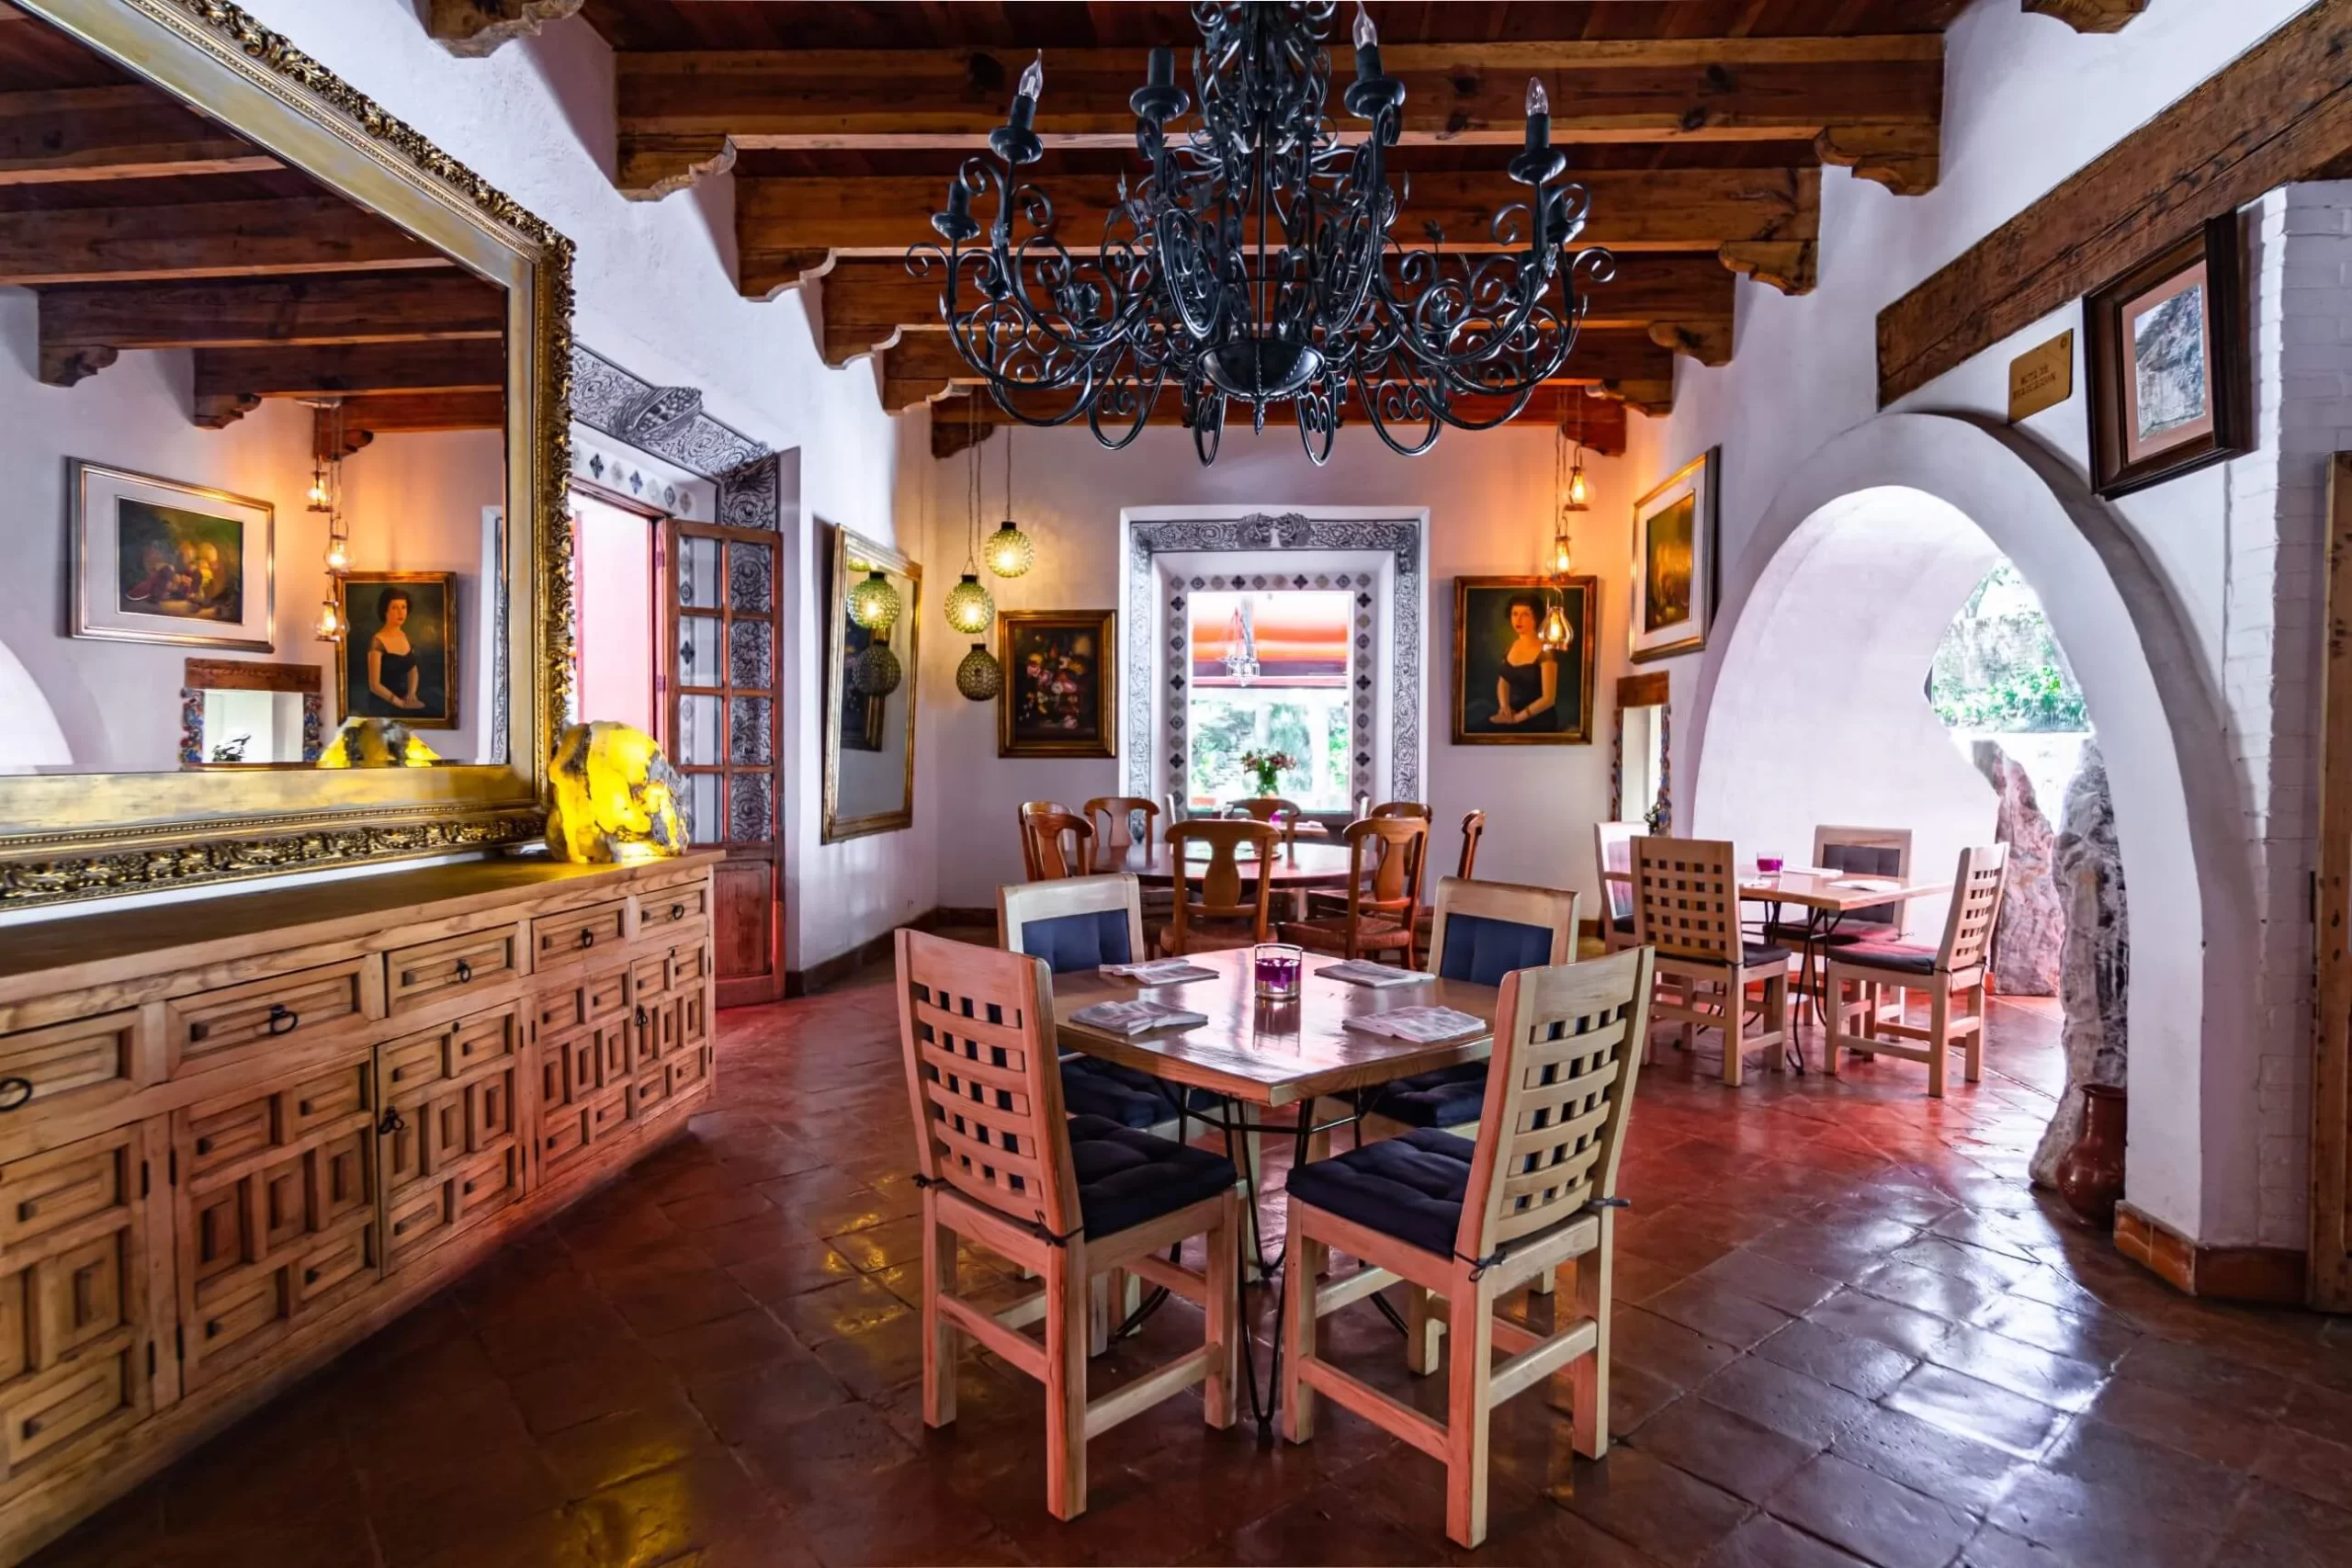 “Pleasure Through the Senses” Tasting Menu, Wine Pairing & Massage at Molino de los Reyes